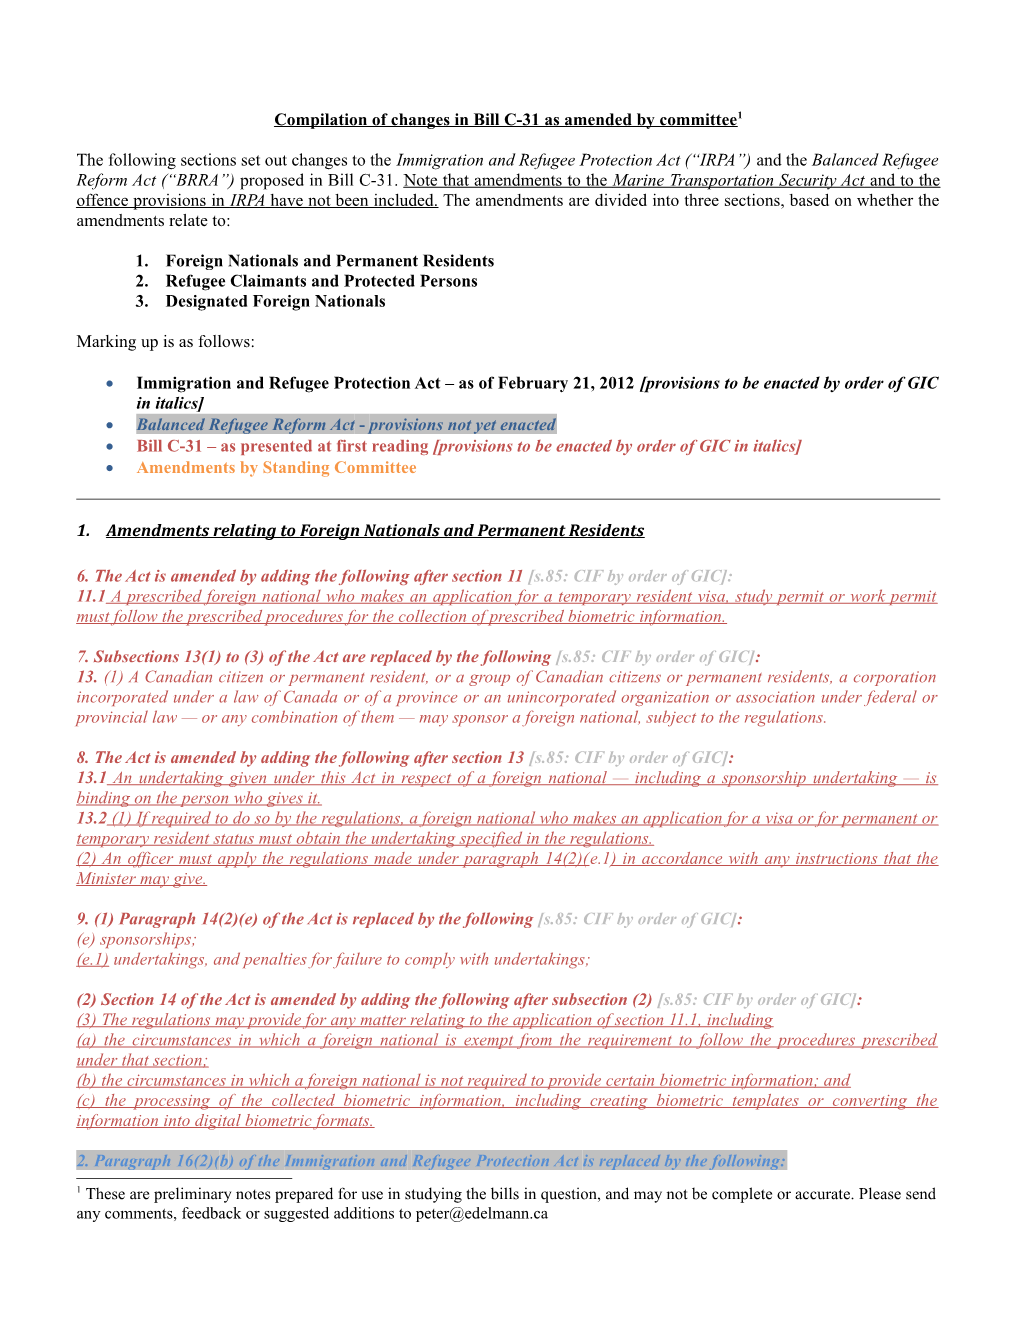 2012 IRPA Amendments Summary (C-31/BRRA)